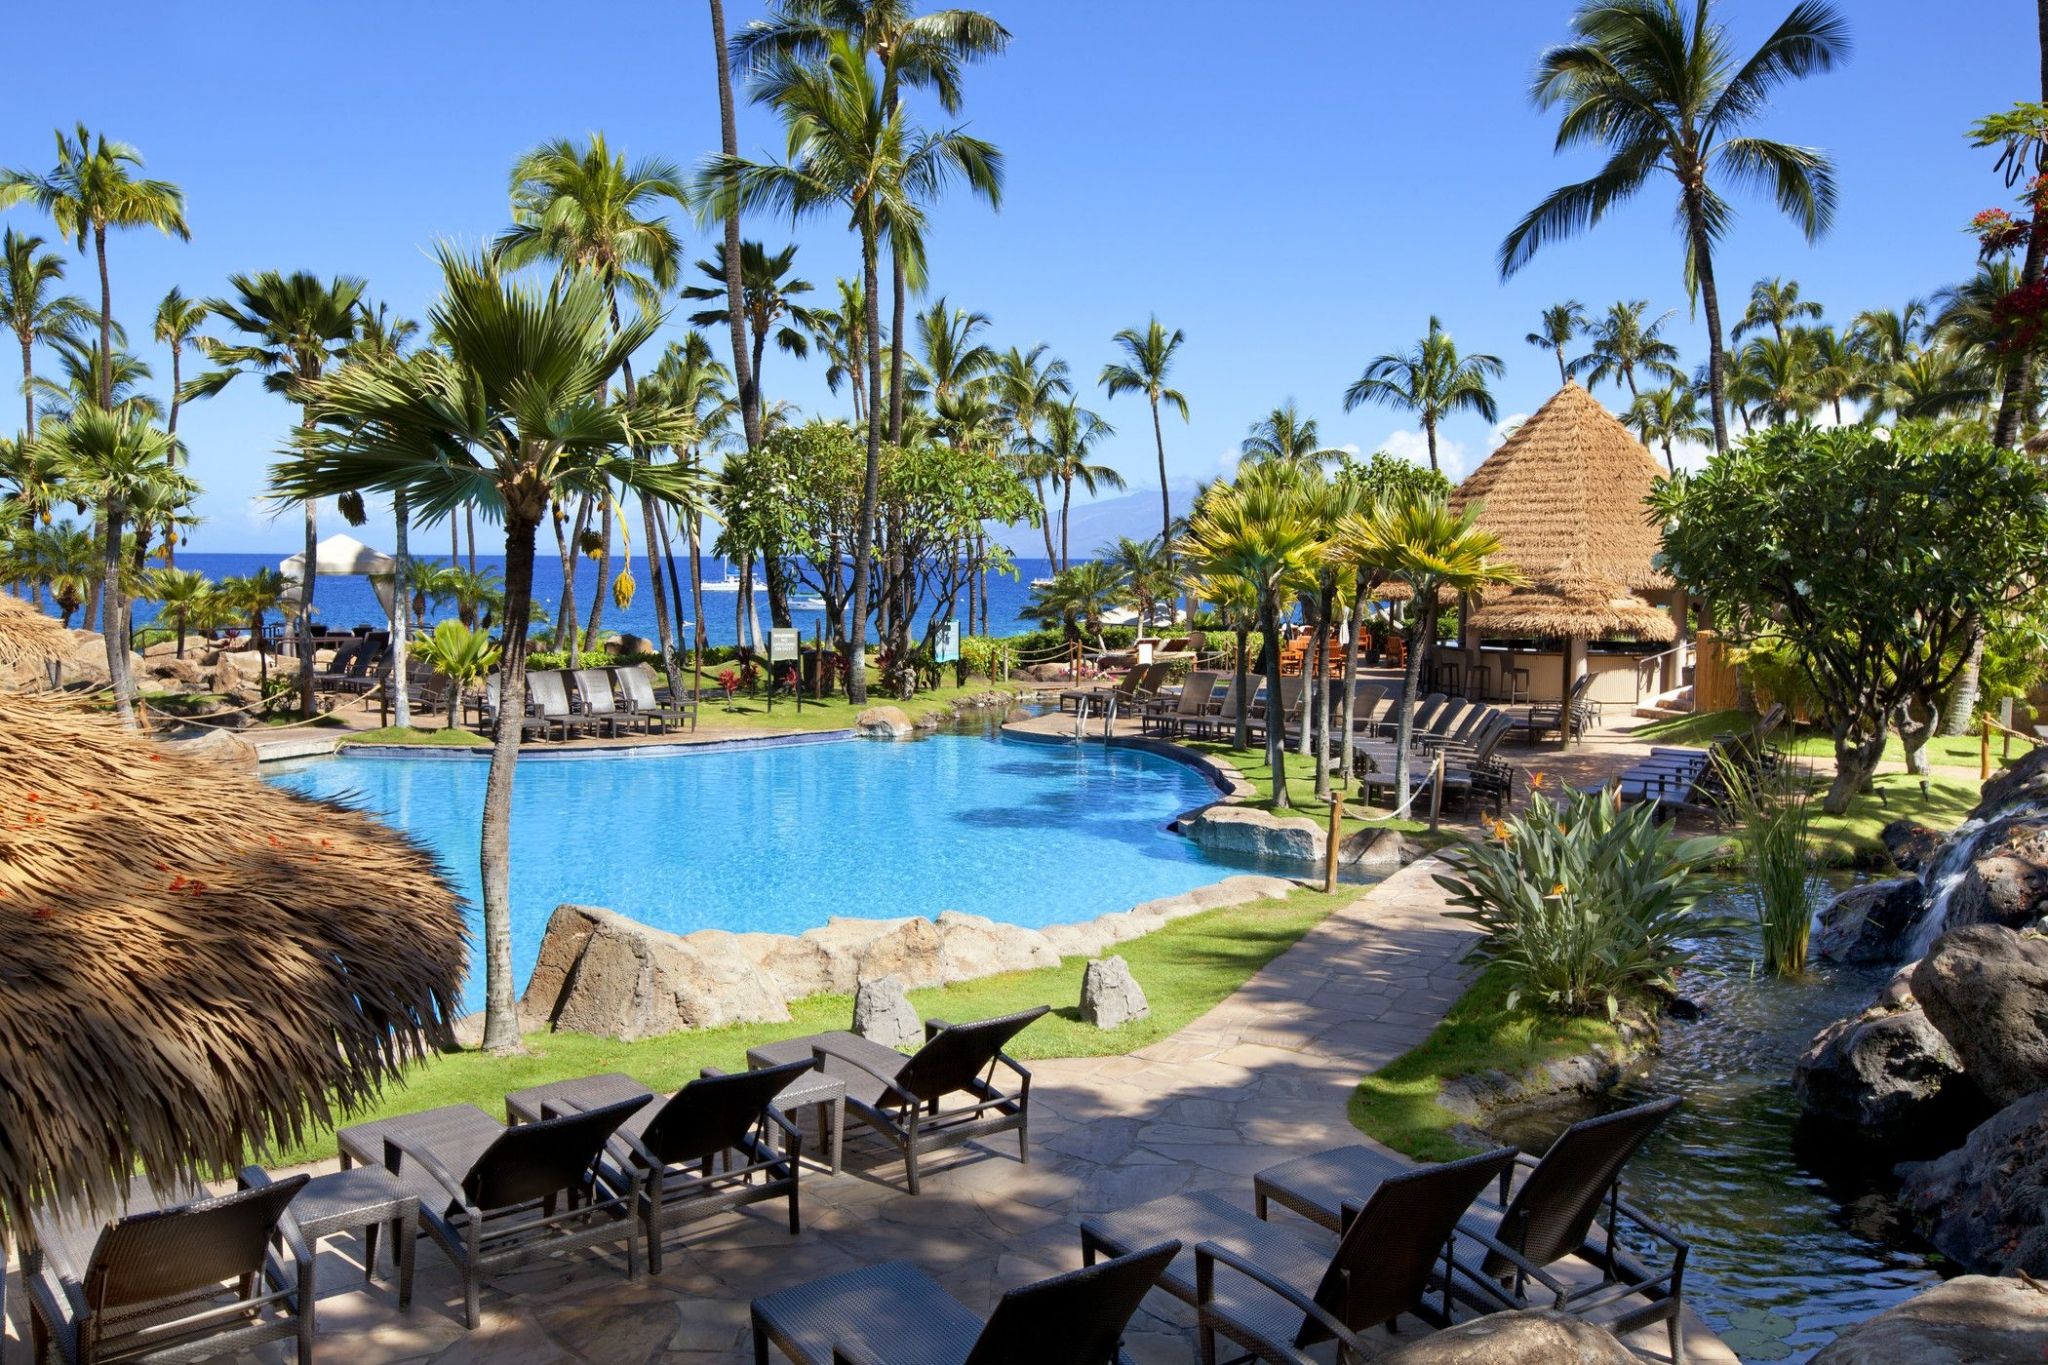 Maui Luxury Hotel The Westin Maui Resort & Spa Kaanapali Beach